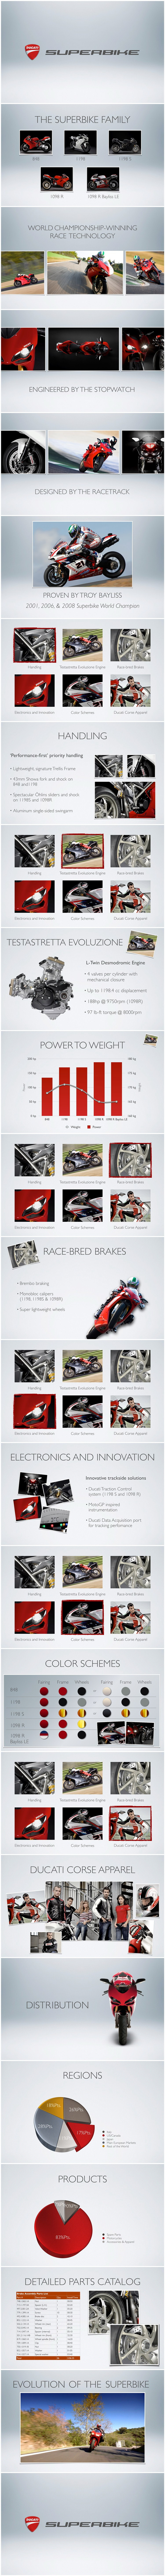 苹果官方保密多年keynote作品-Ducati Superbike 宣传片